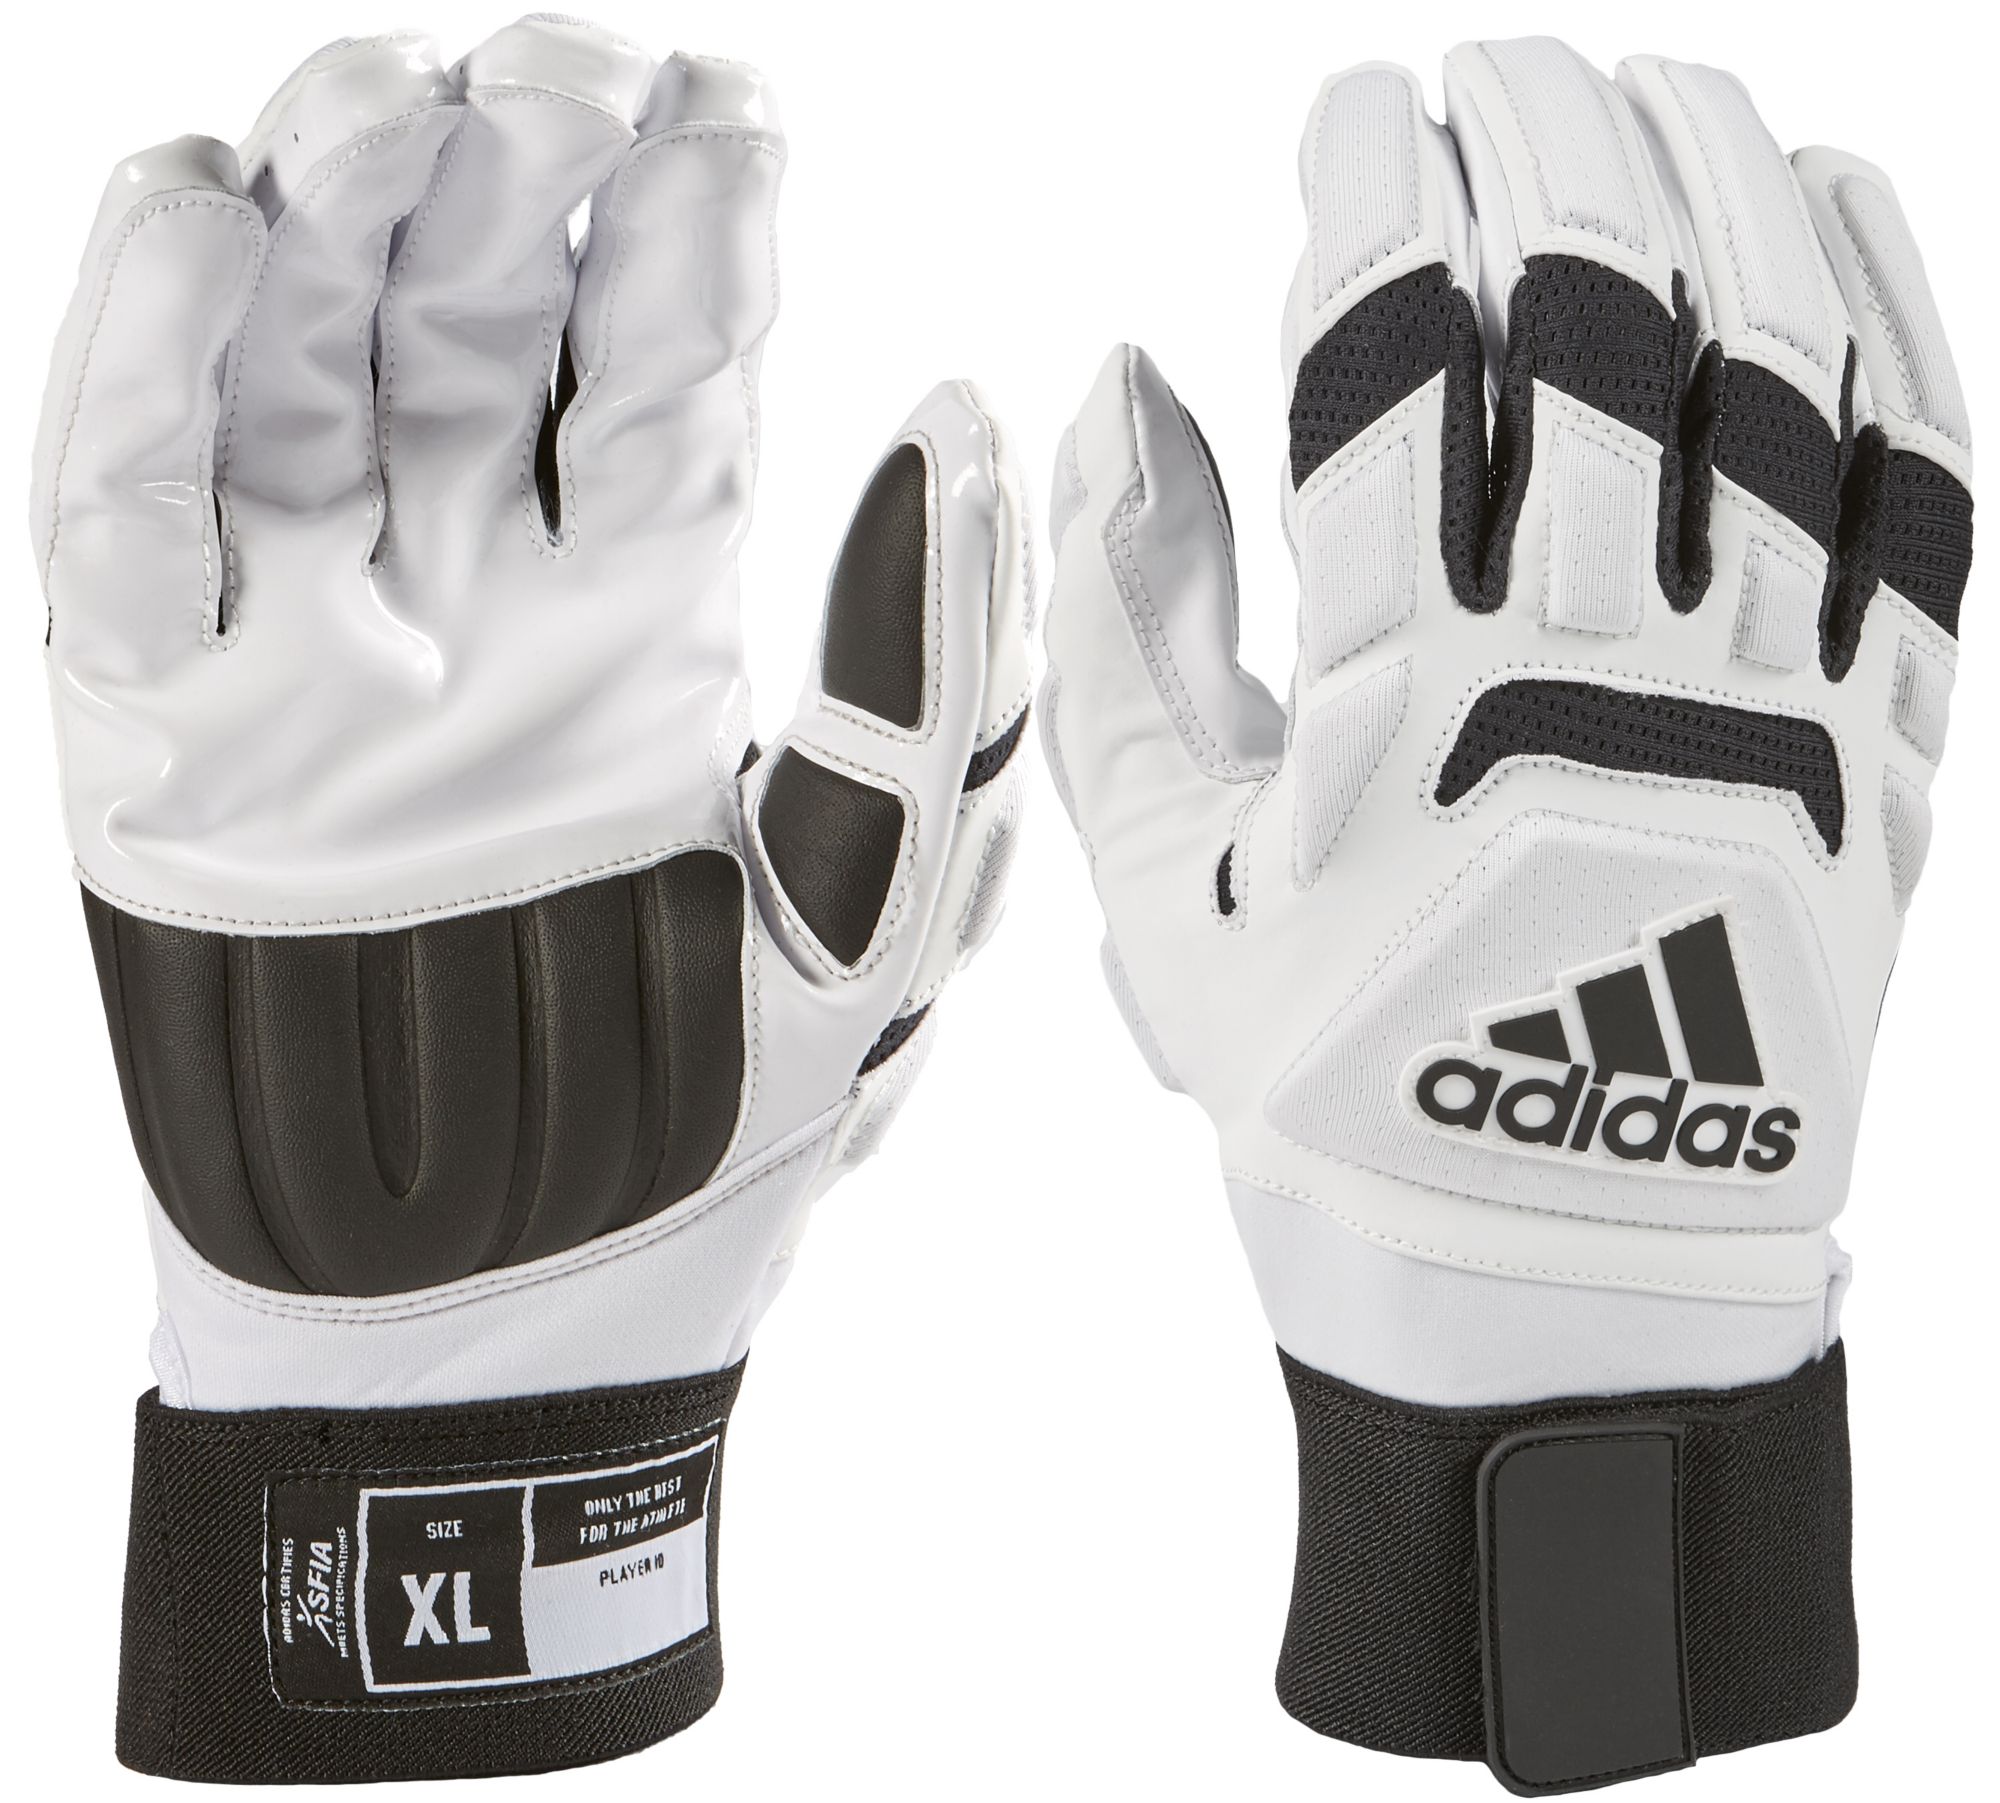 adidas techfit lineman football gloves